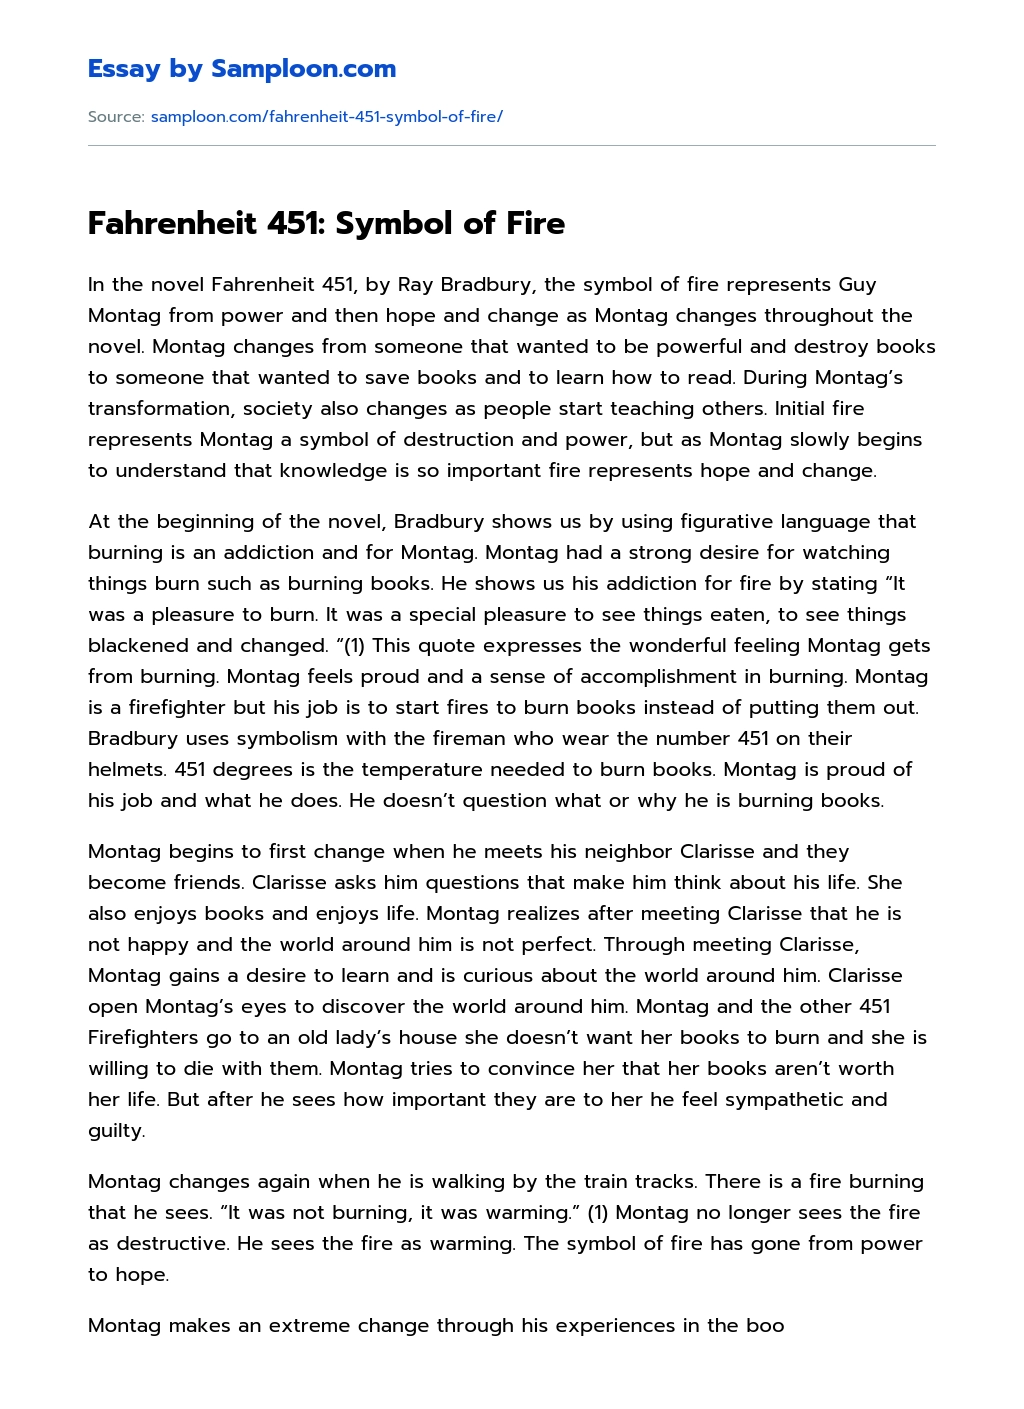 Fahrenheit 451: Symbol of Fire Analytical Essay essay